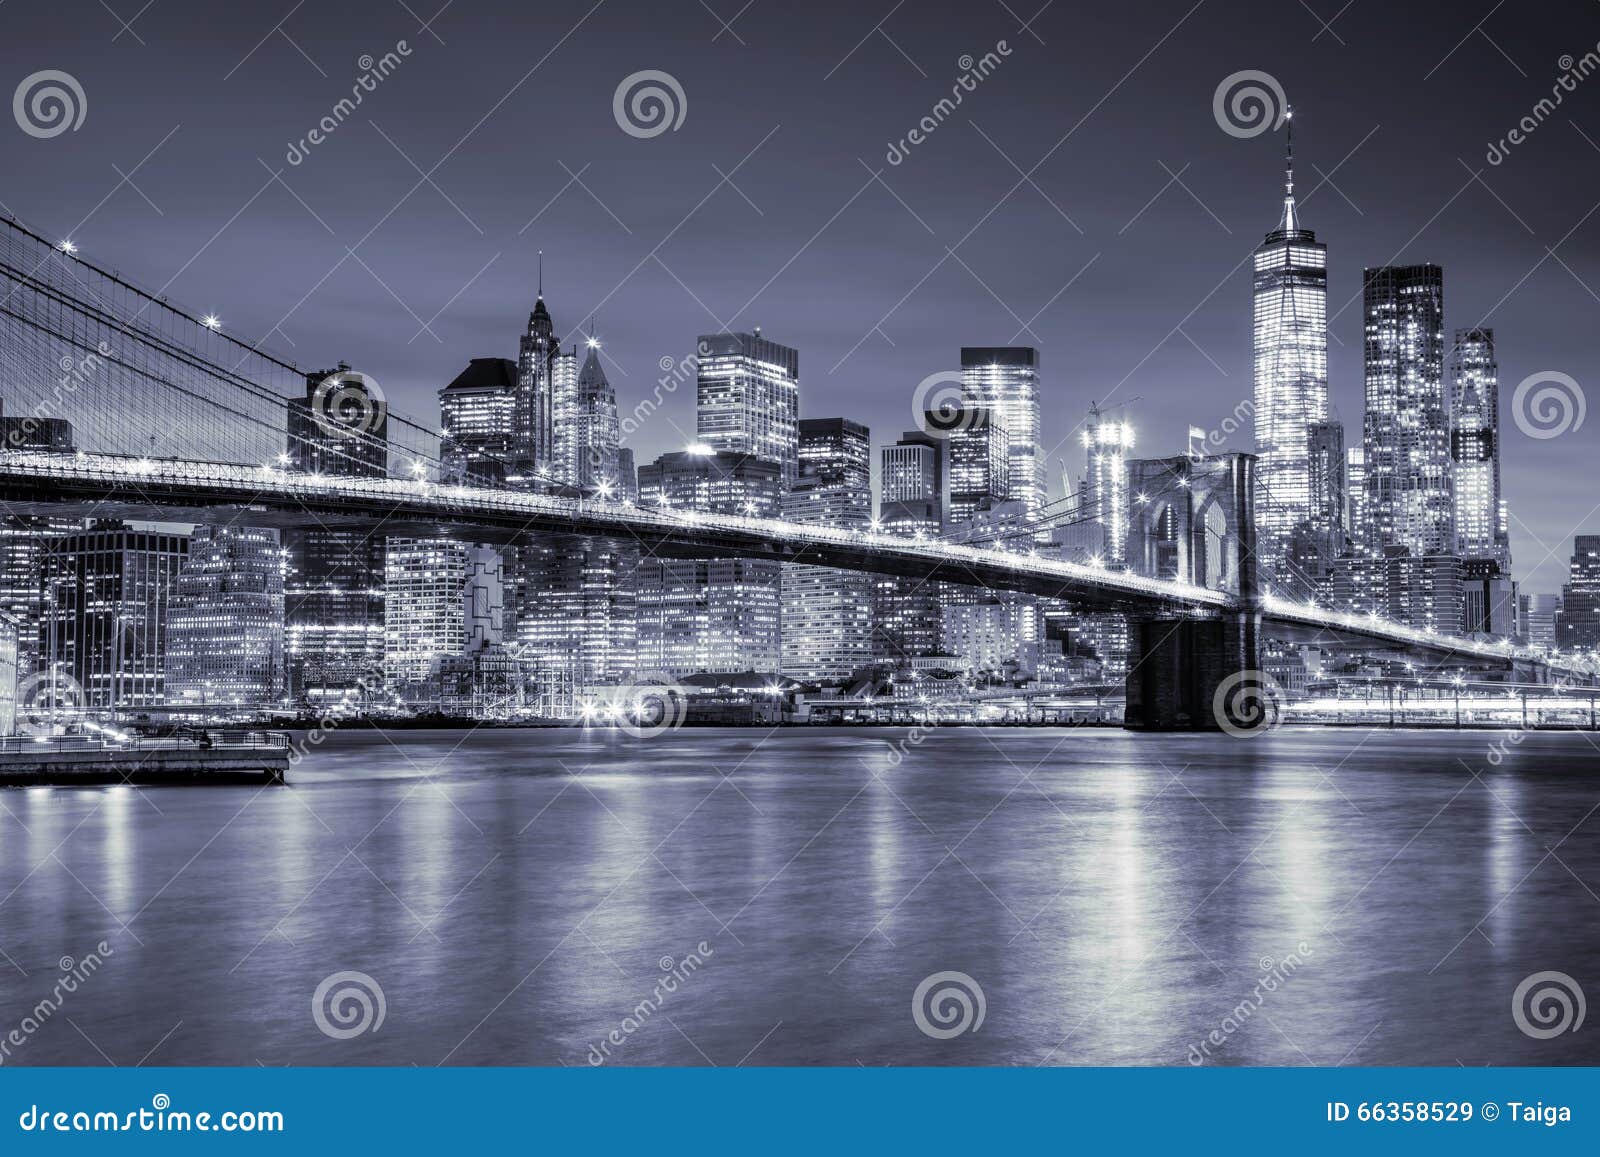 view of manhattan and brooklin bridge by night, new york city